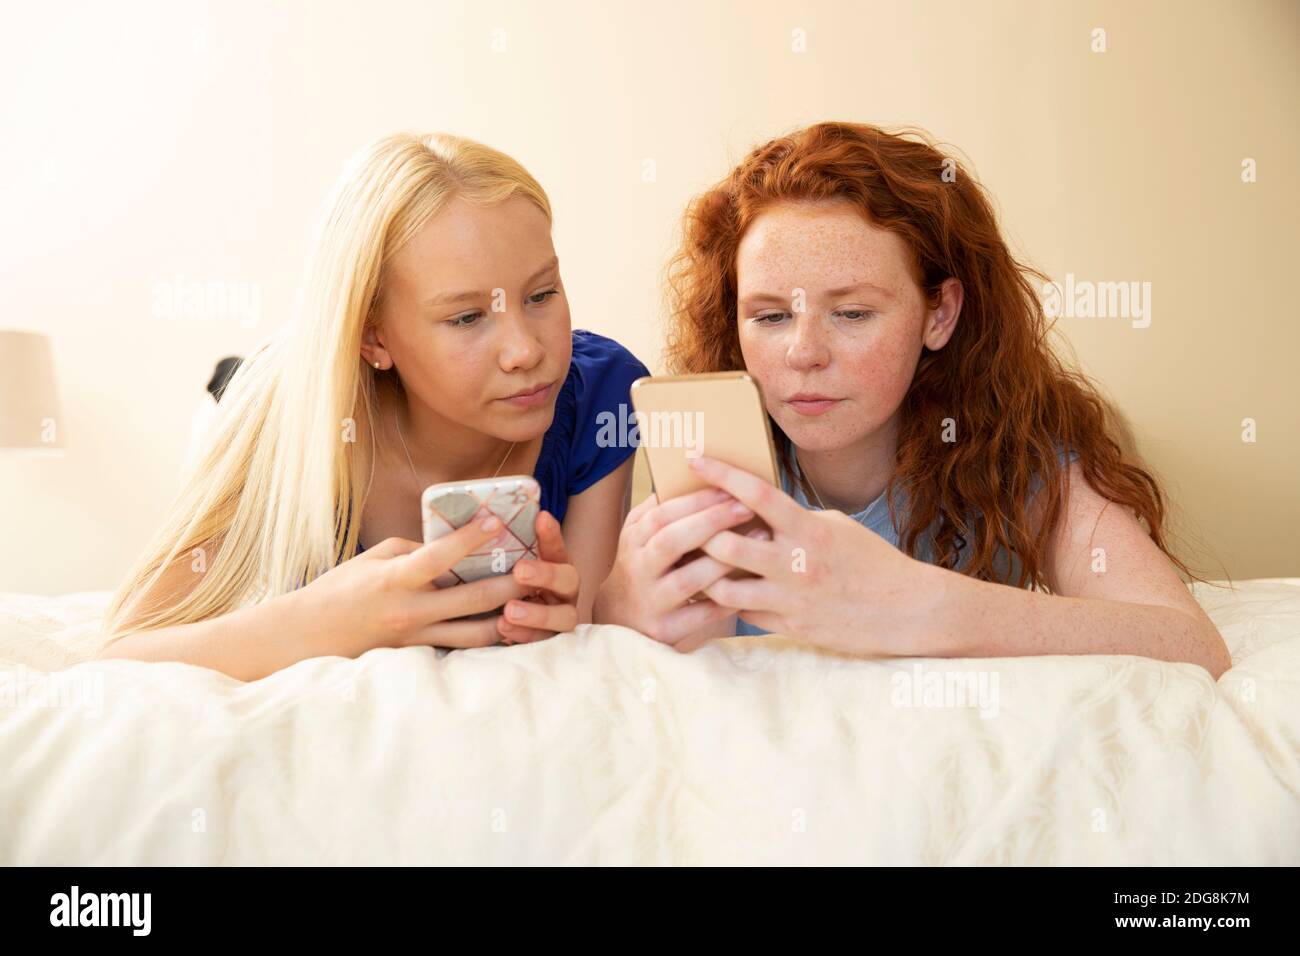 Preteen girl friends using smart phones on bed Stock Photo